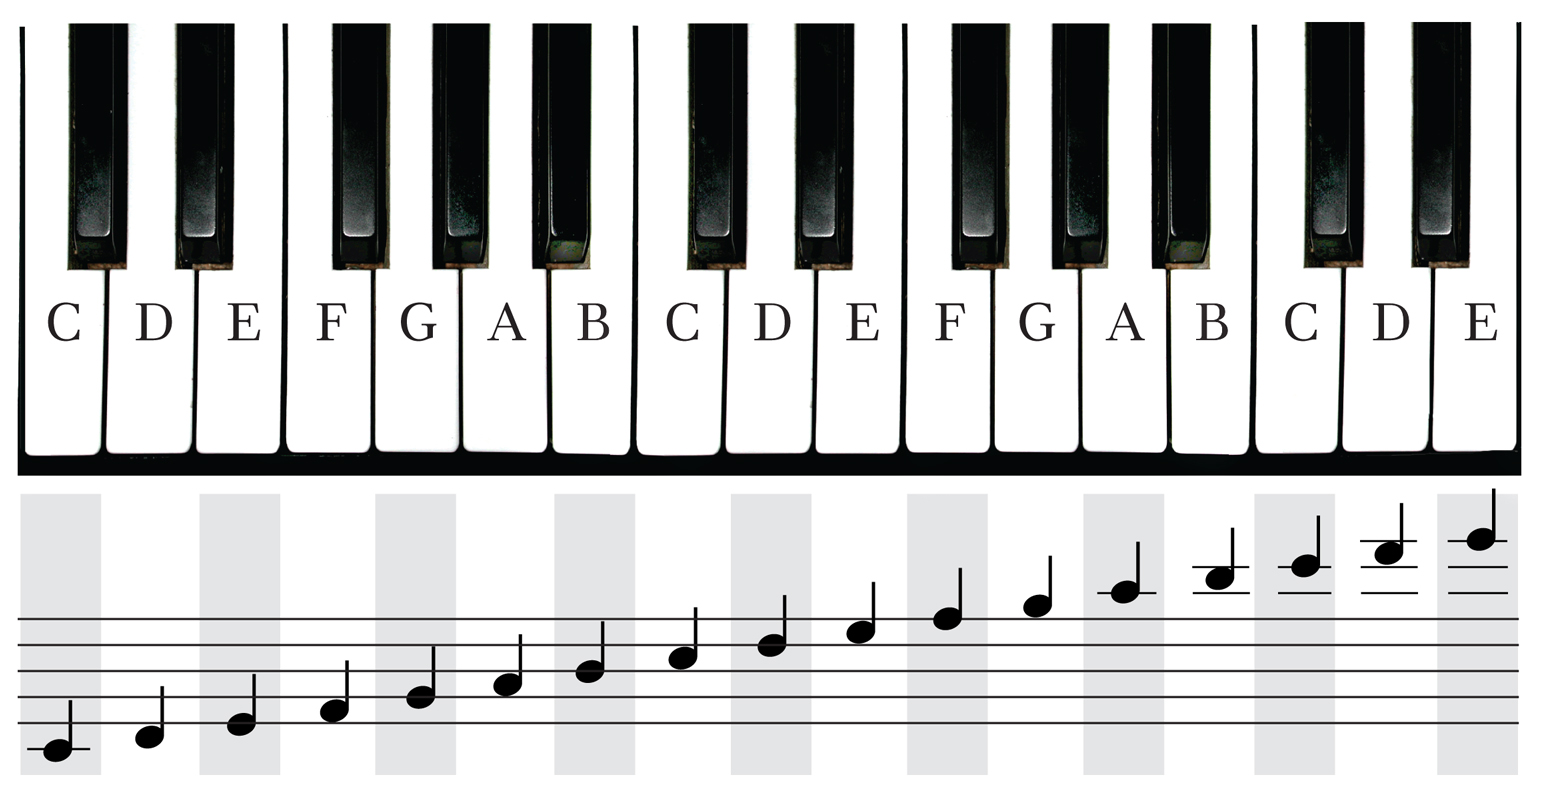 free-piano-keyboard-images-download-free-piano-keyboard-images-png-images-free-cliparts-on